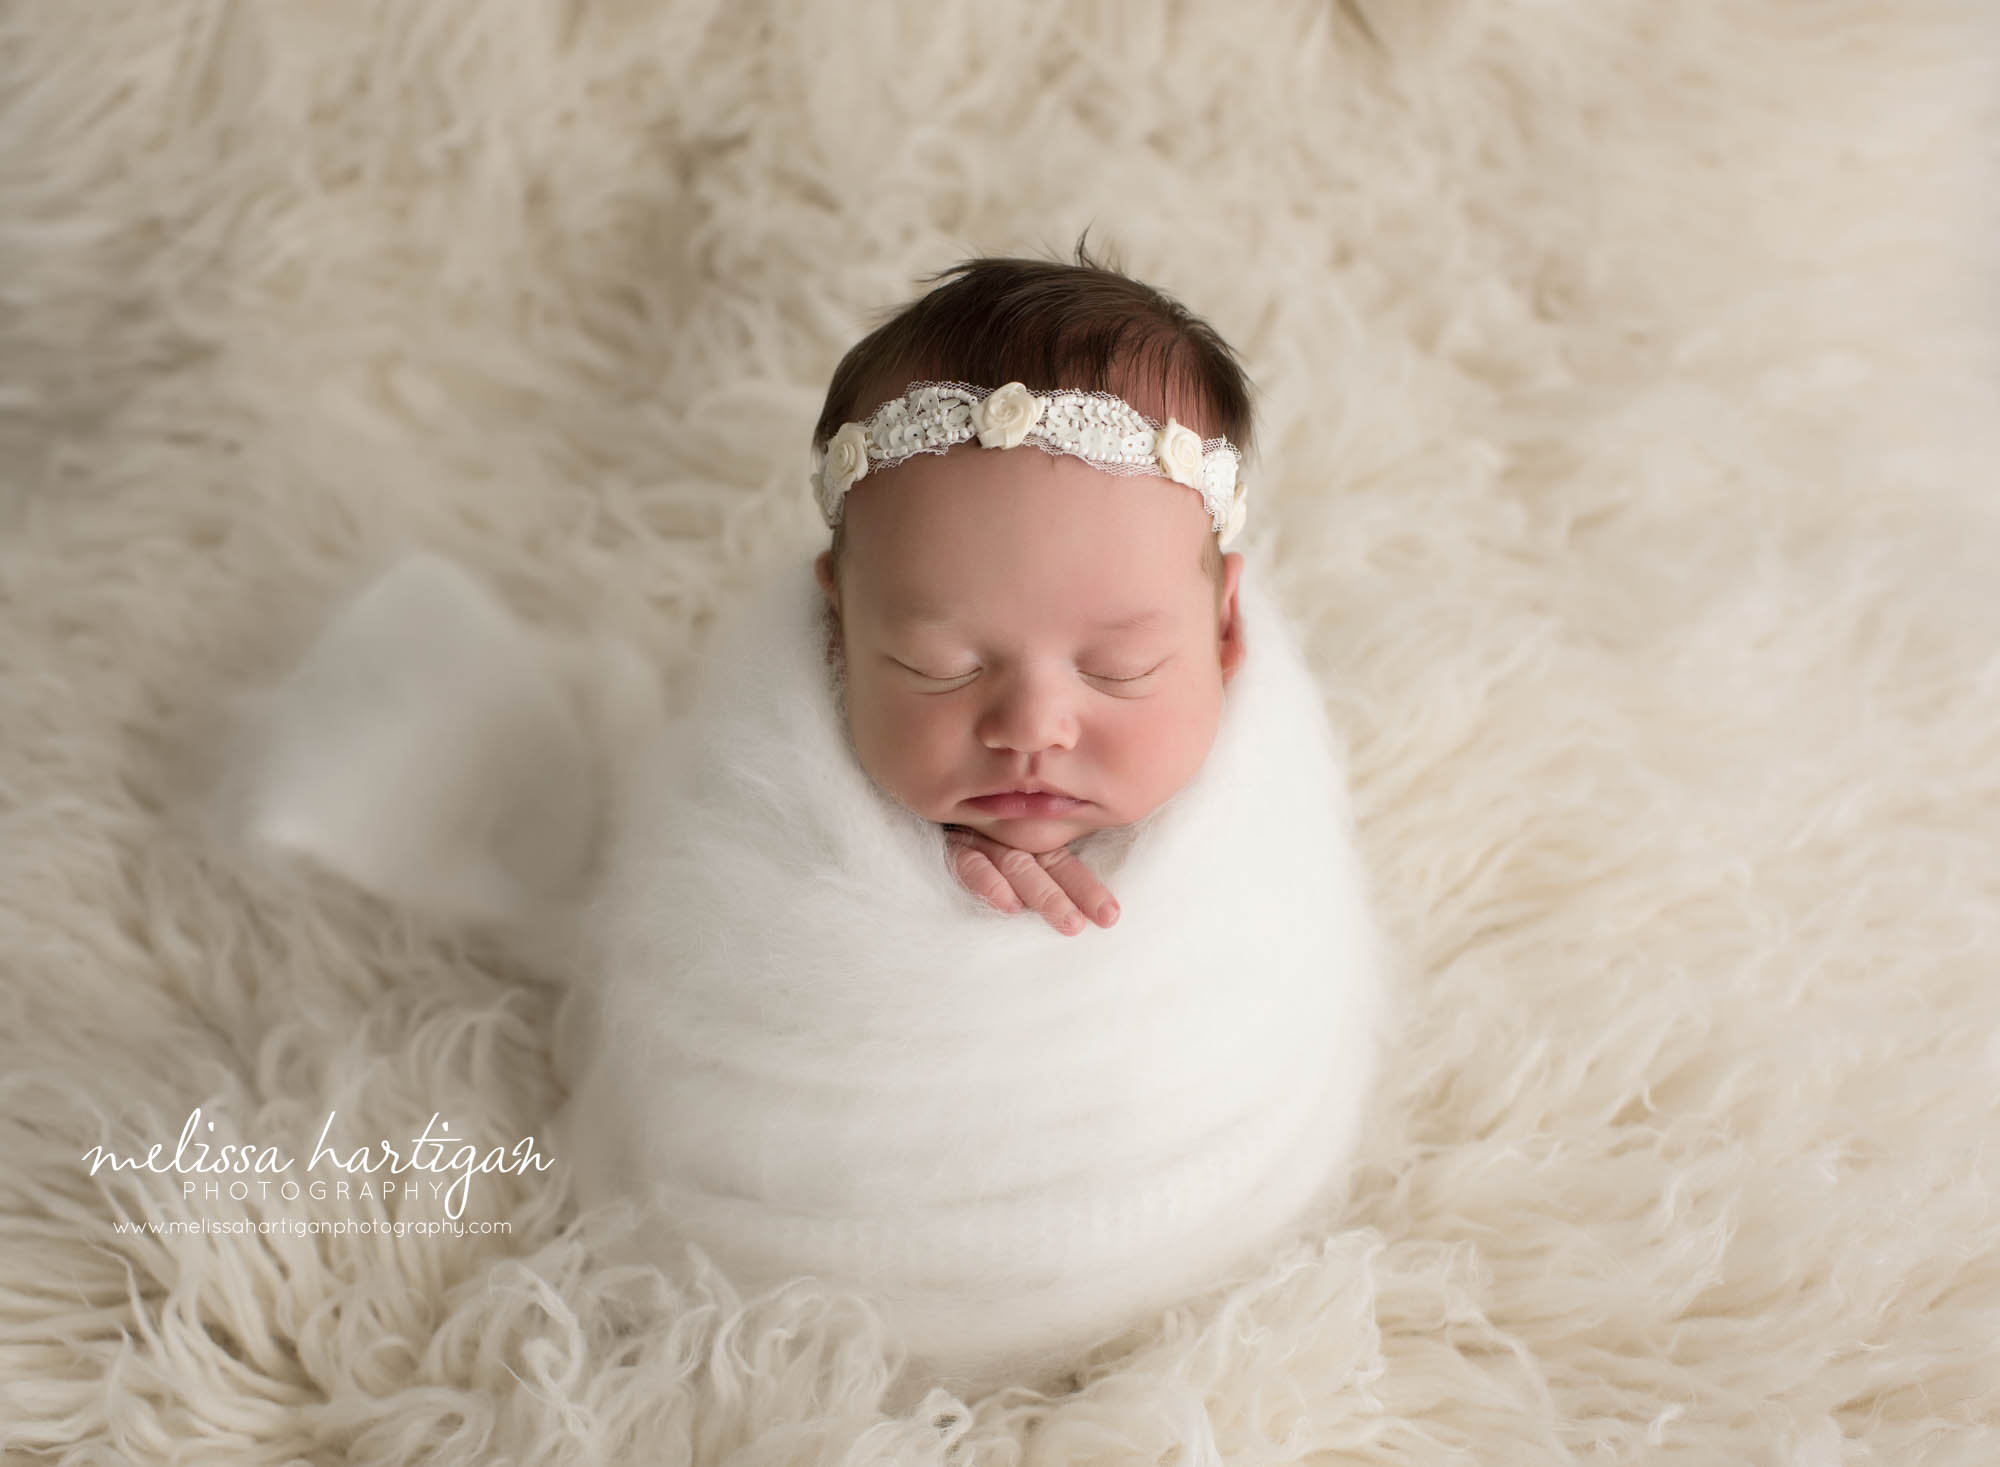 newborn baby girl wrapped in white knitted angora wrap wearing headband